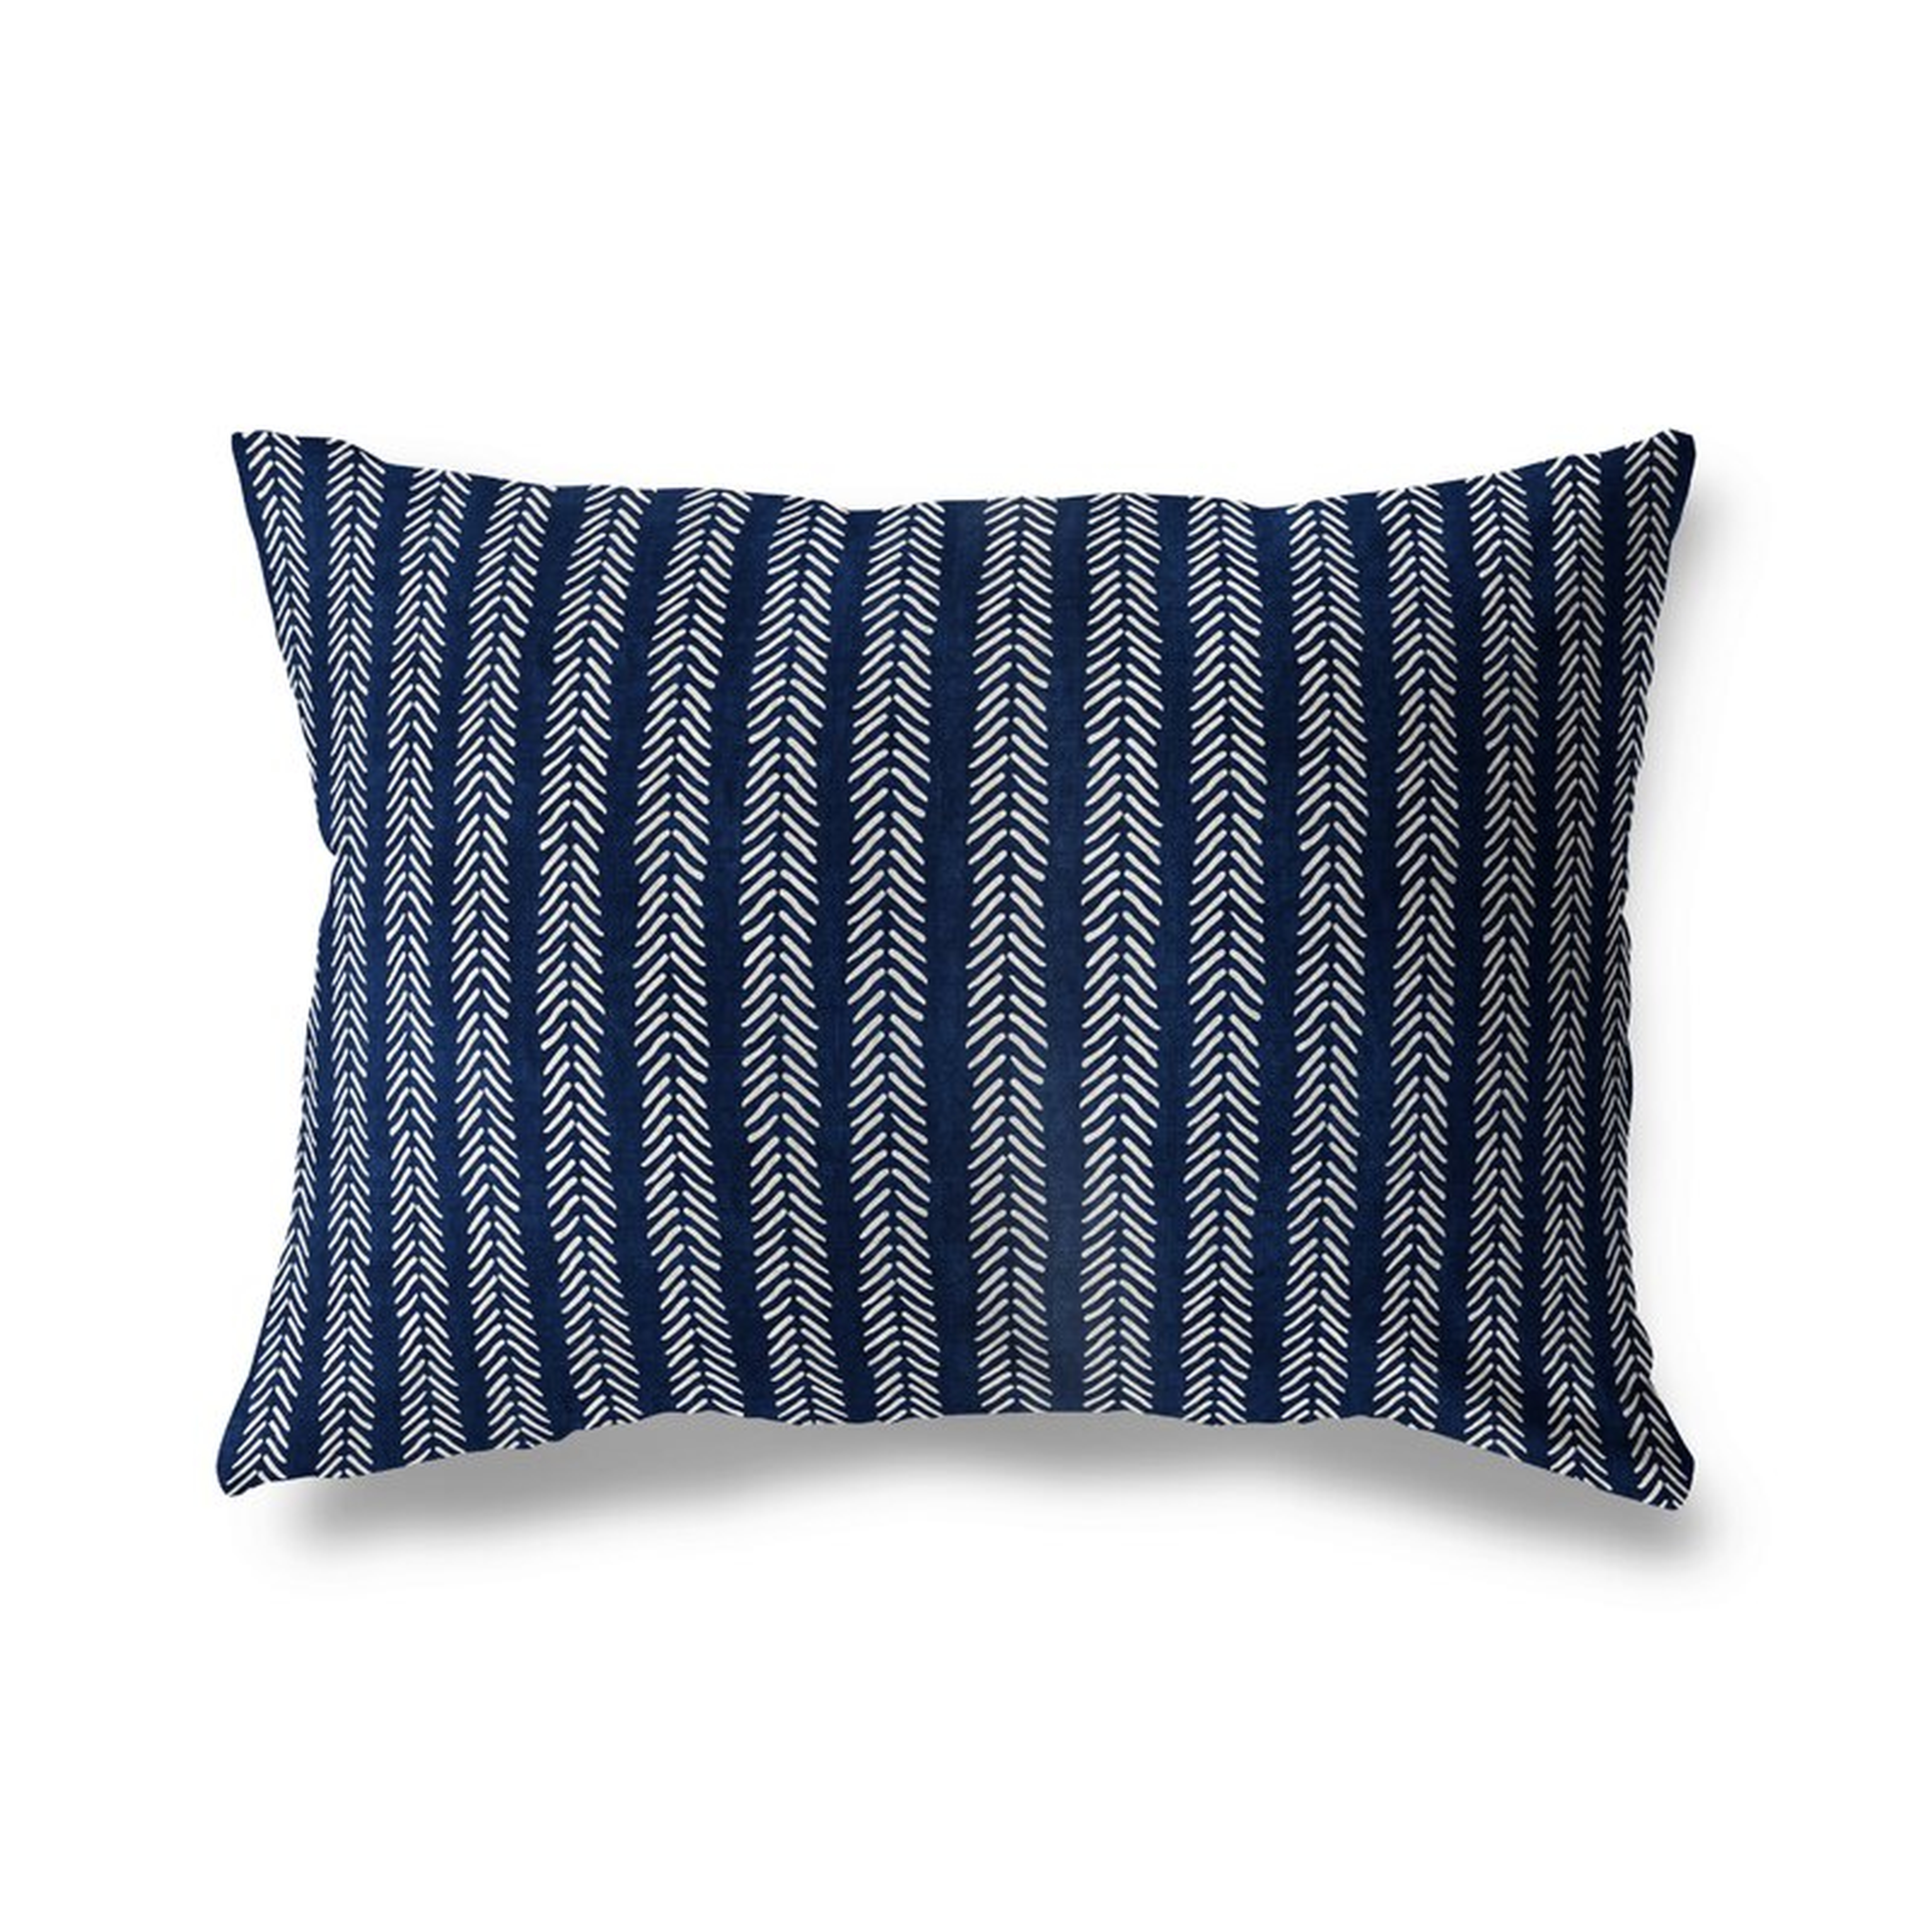 12" H x 16" W Indigo Adeline Cotton Striped Lumbar Pillow-Eco-fill - AllModern